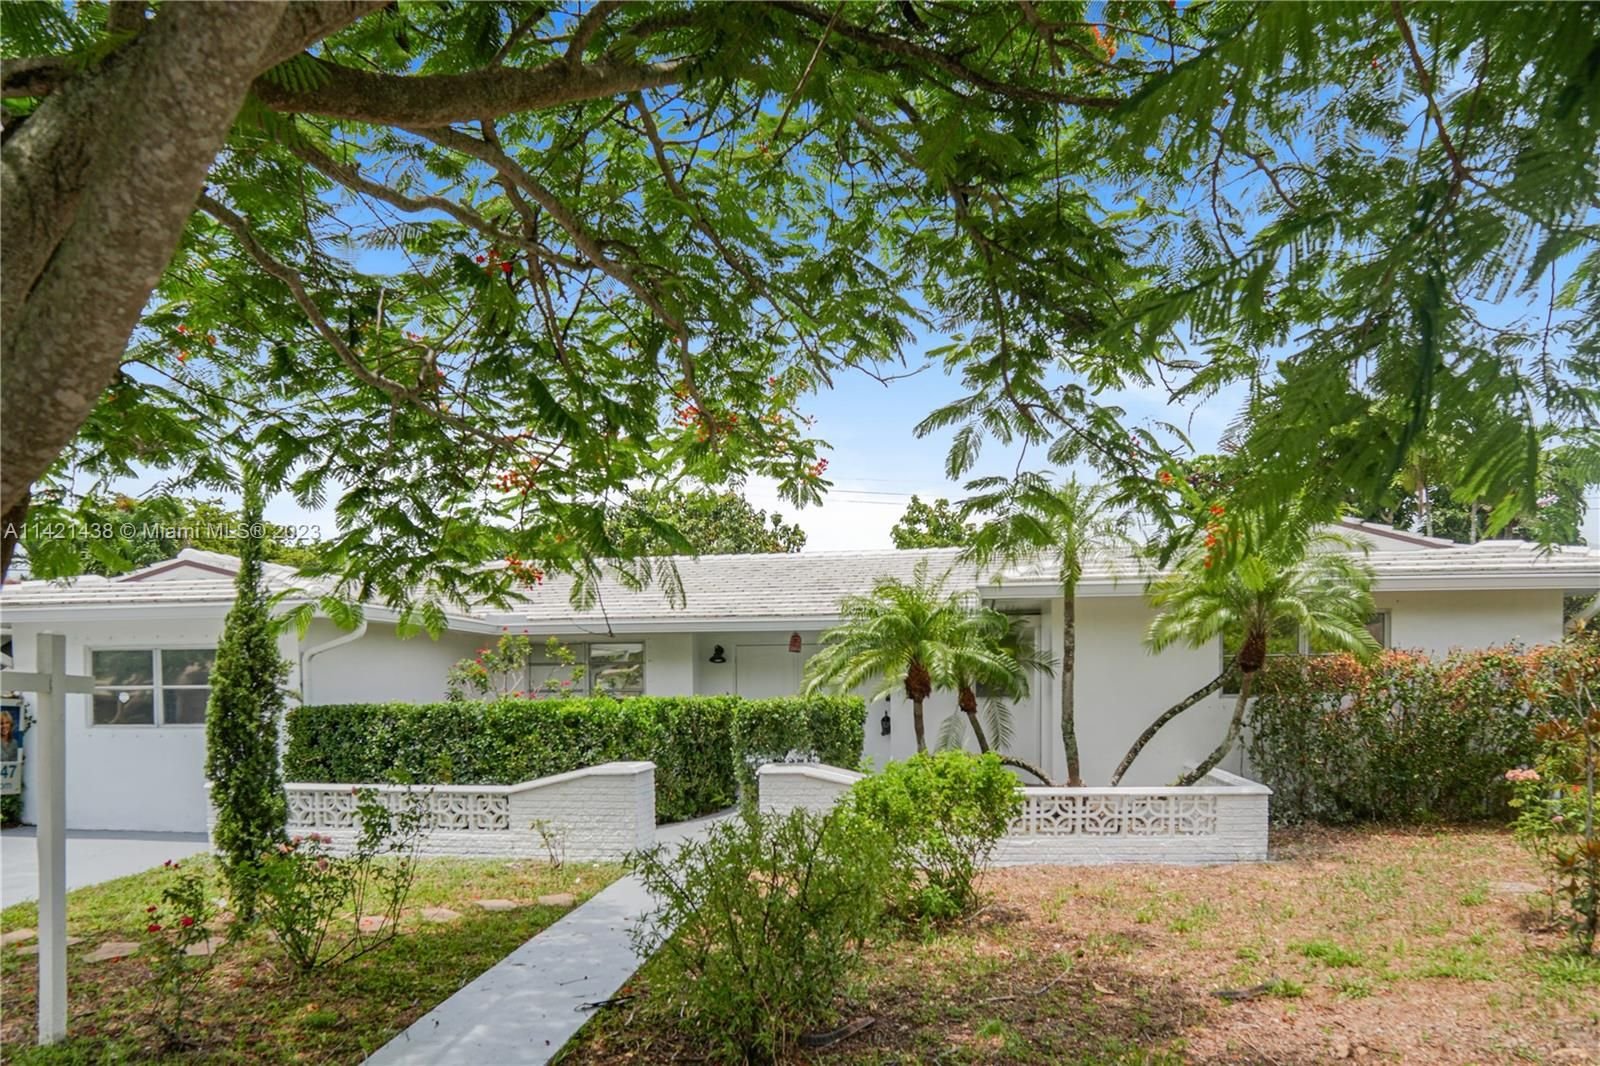 Real estate property located at 2091 206th St, Miami-Dade County, Miami, FL